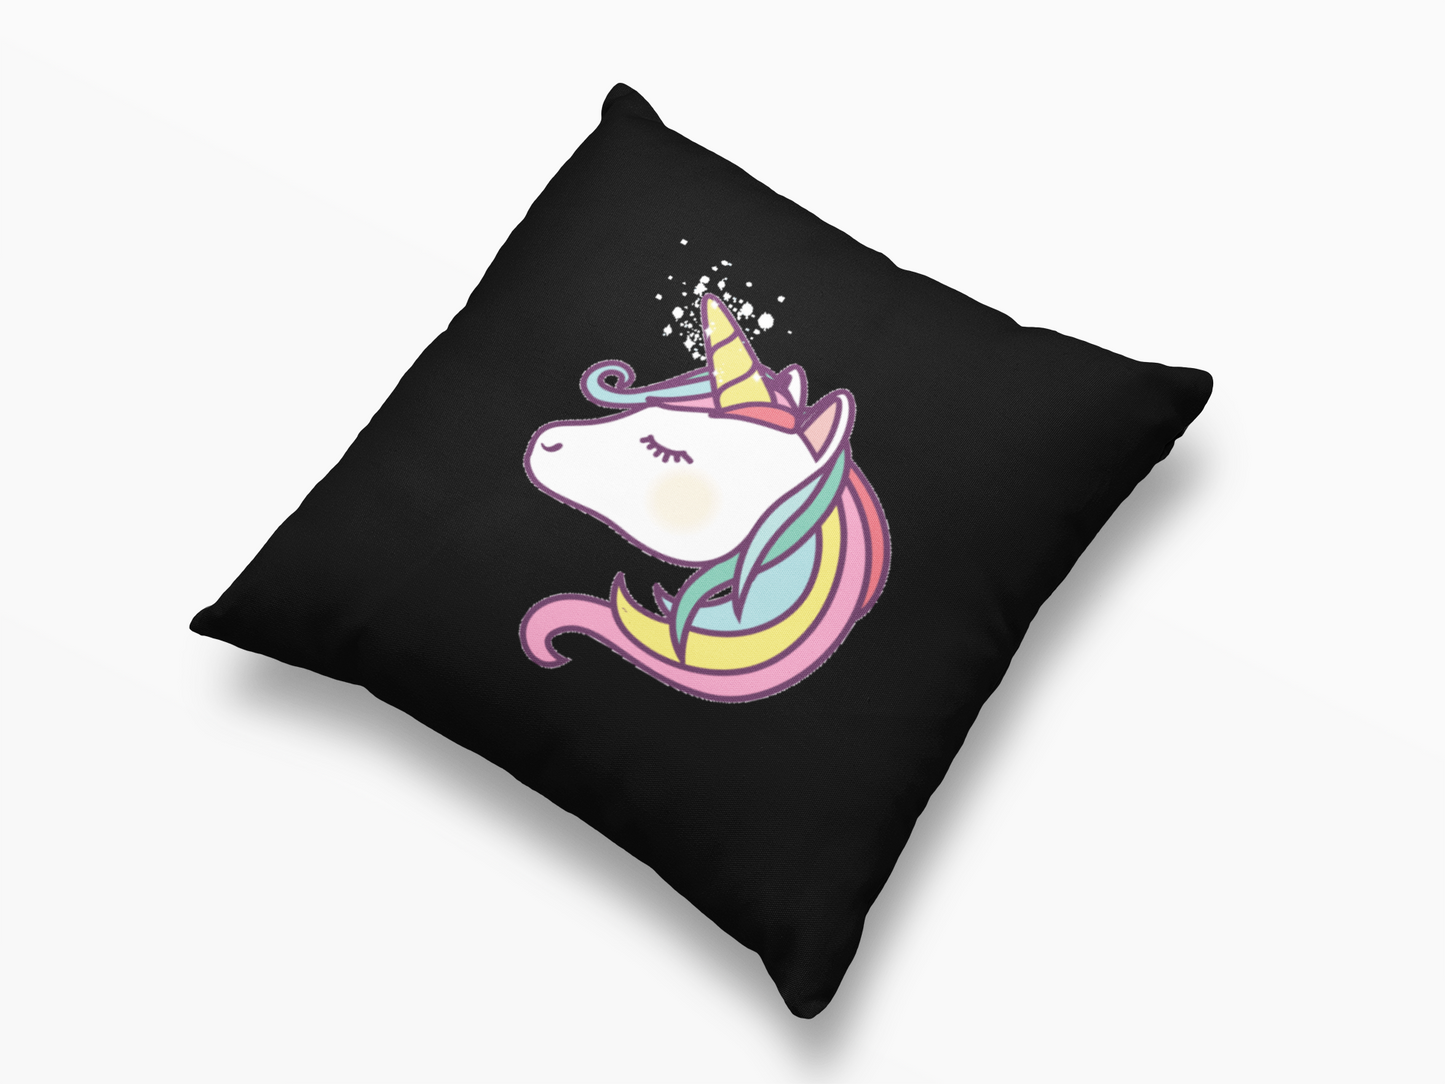 Cushion Cover Princess Unicorn - Pink